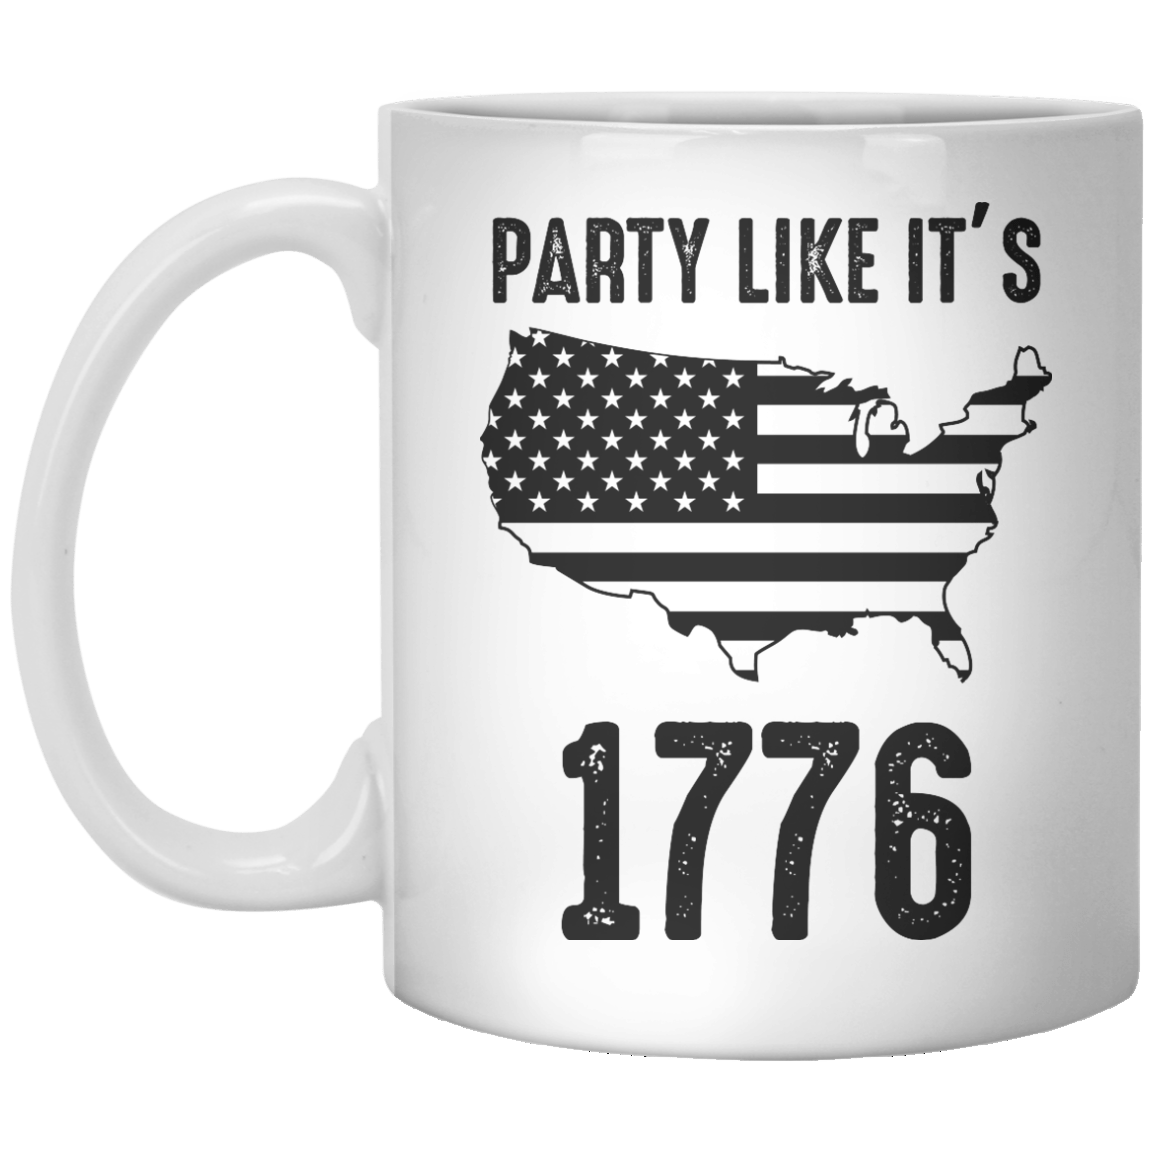 Party Like It's 1776 MUG - Shirtoopia